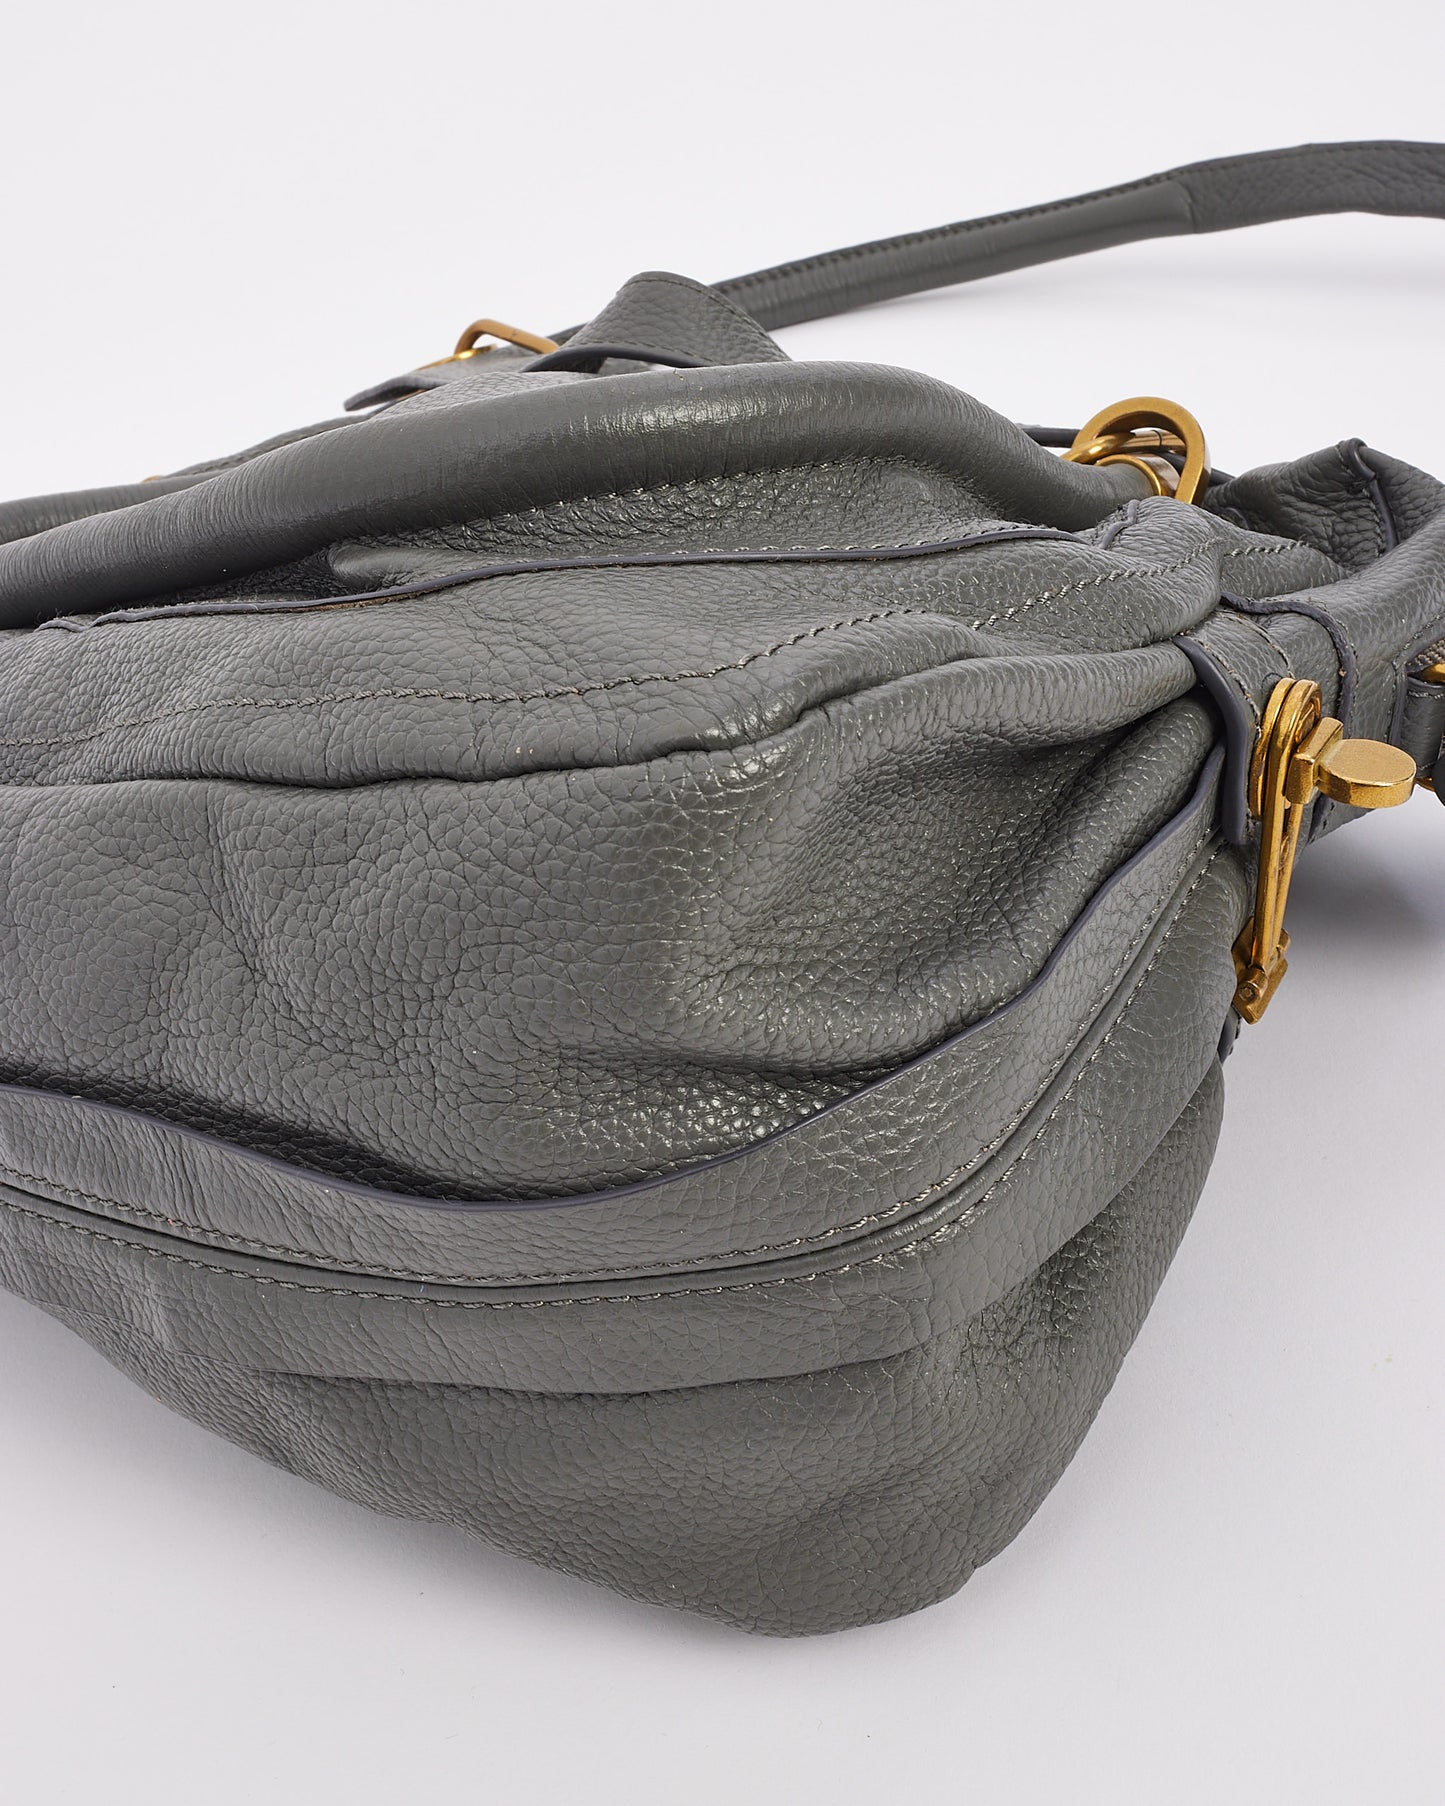 Chloé Dark Grey Leather Paraty Bag